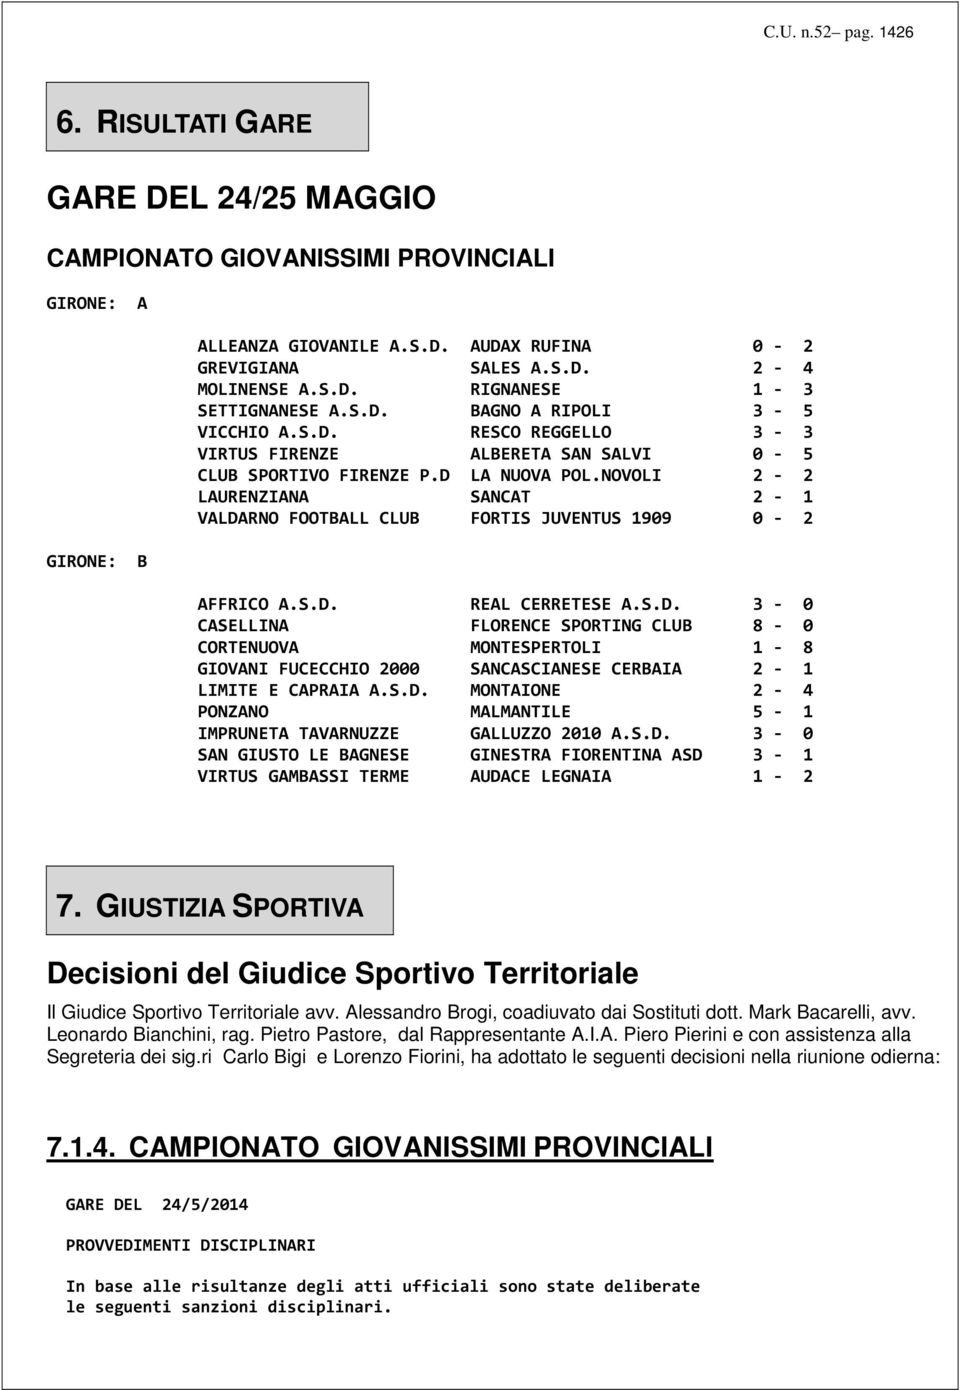 NOVOLI 2-2 LAURENZIANA SANCAT 2-1 VALDARNO FOOTBALL CLUB FORTIS JUVENTUS 1909 0-2 AFFRICO A.S.D. REAL CERRETESE A.S.D. 3-0 CASELLINA FLORENCE SPORTING CLUB 8-0 CORTENUOVA MONTESPERTOLI 1-8 GIOVANI FUCECCHIO 2000 SANCASCIANESE CERBAIA 2-1 LIMITE E CAPRAIA A.